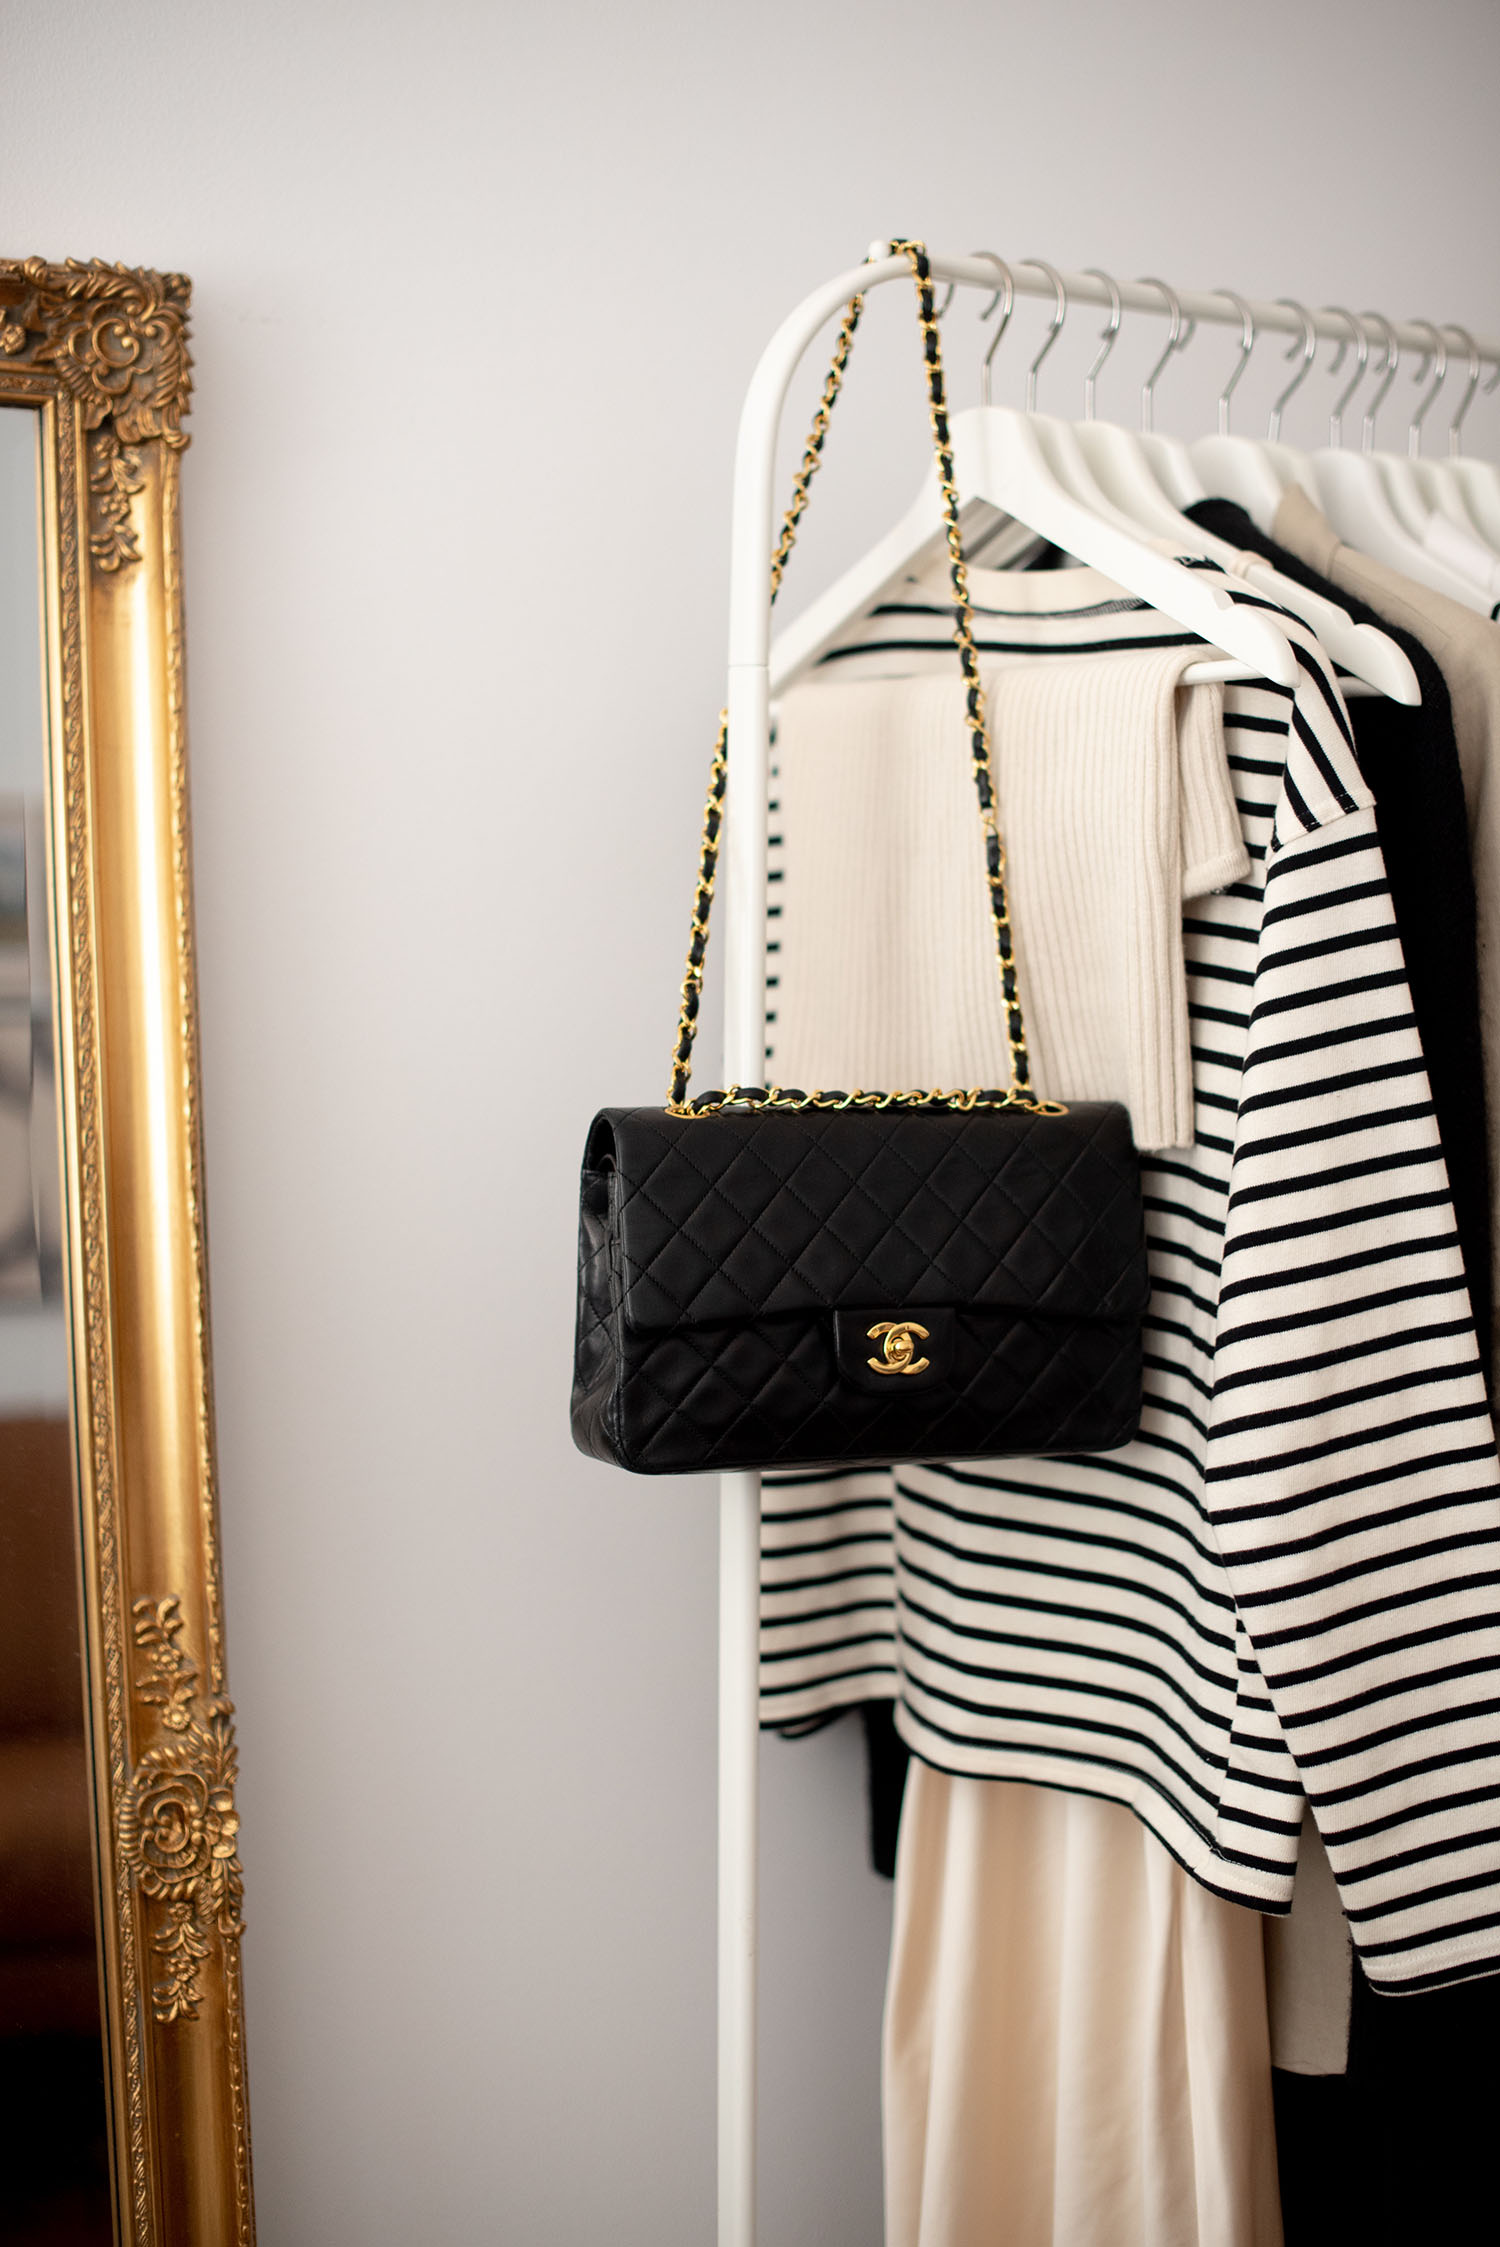 Coco & Voltaire - Chanel double flap handbag, Almada Label tube top, Zara striped shirt